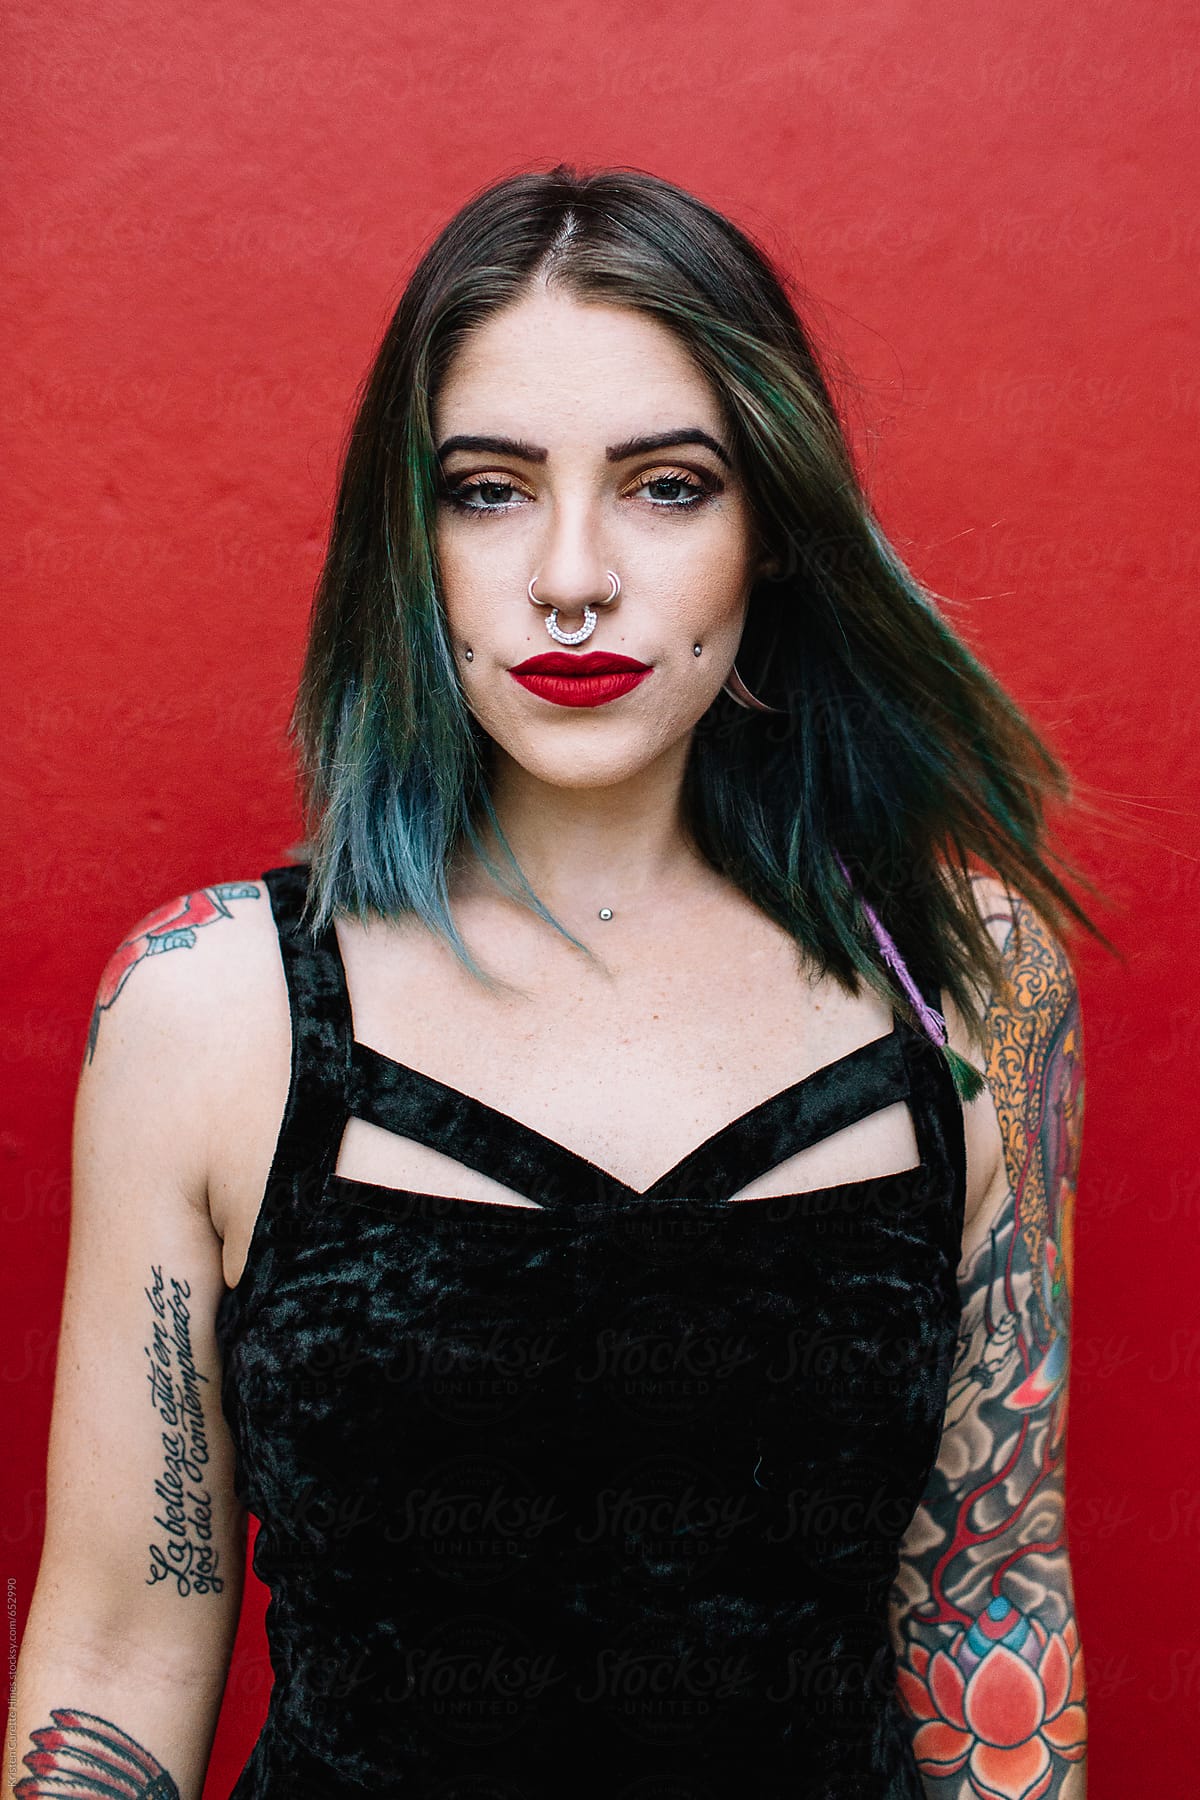 Portrait Of A Punk Rock Woman With Tattoos By Kristen Curette